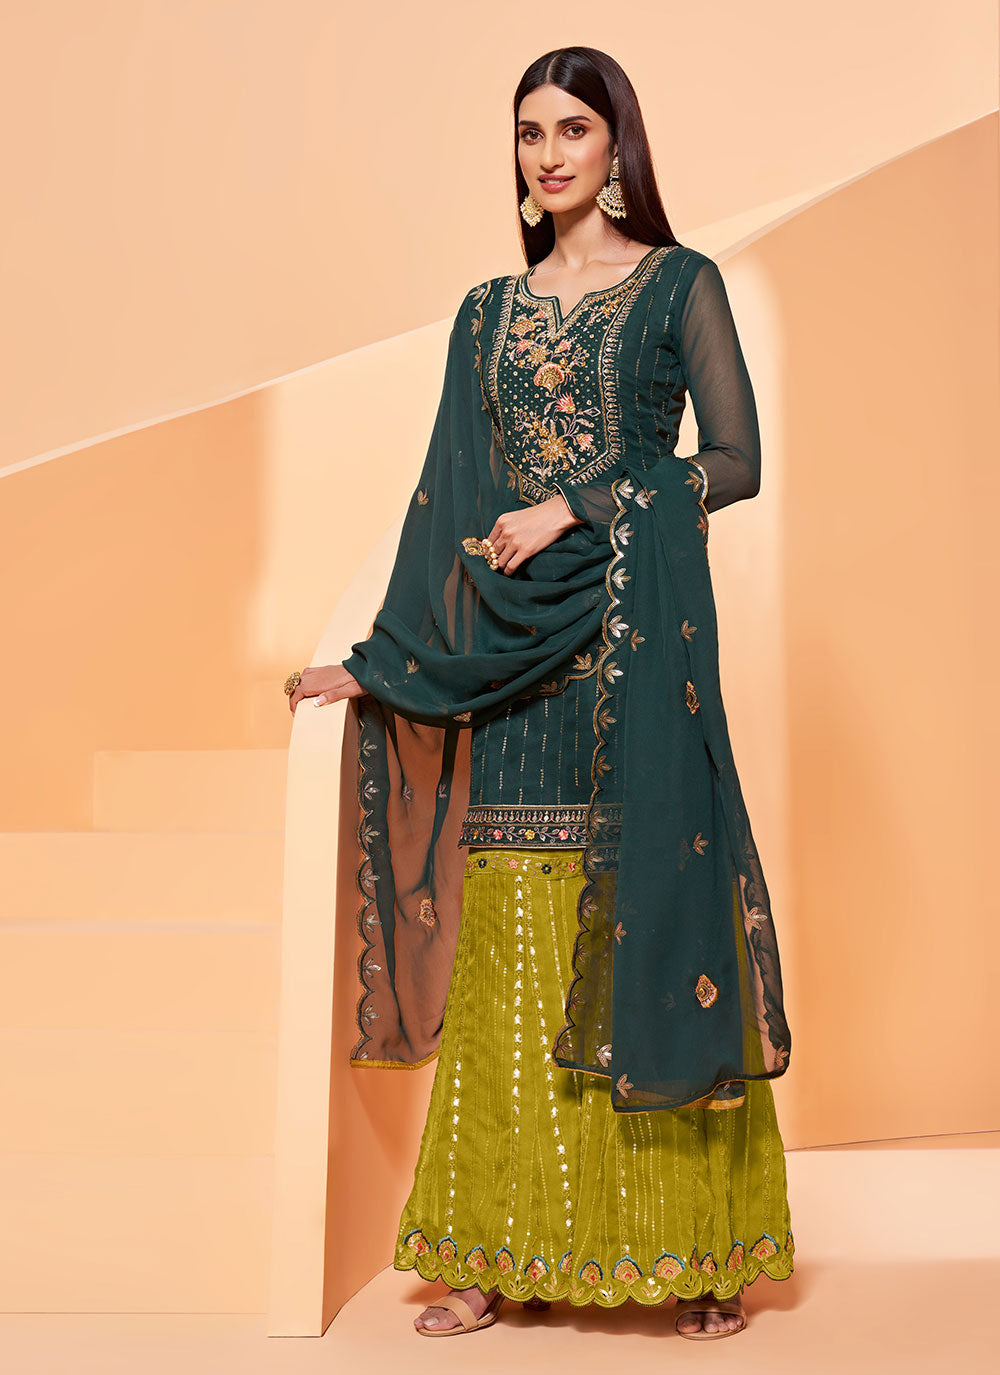 Green Embroidered Designer Pakistani Salwar Suit